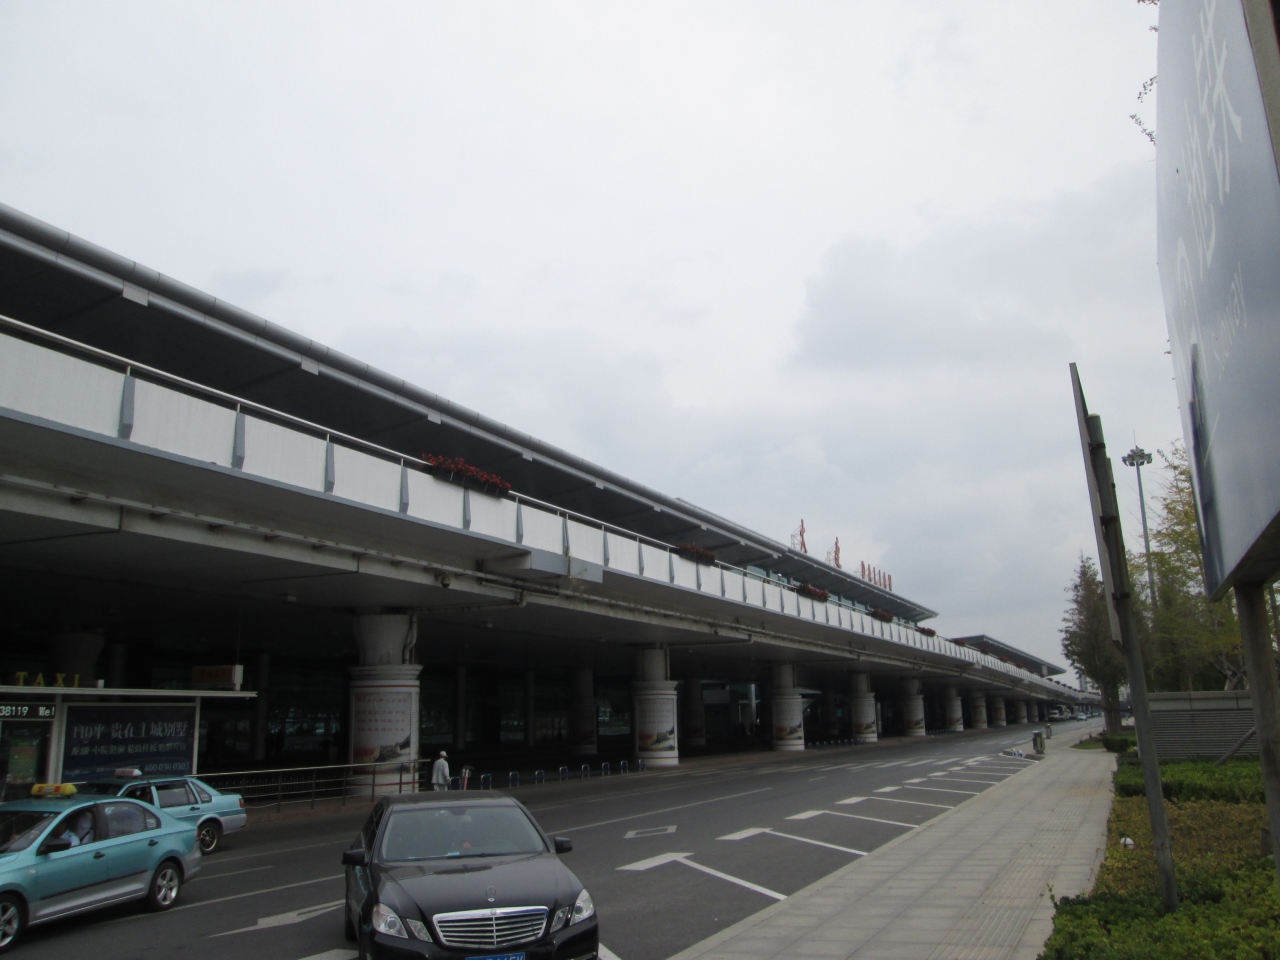 大連周水子国際空港 (DLC)                Dalian Zhoushuizi International Airport